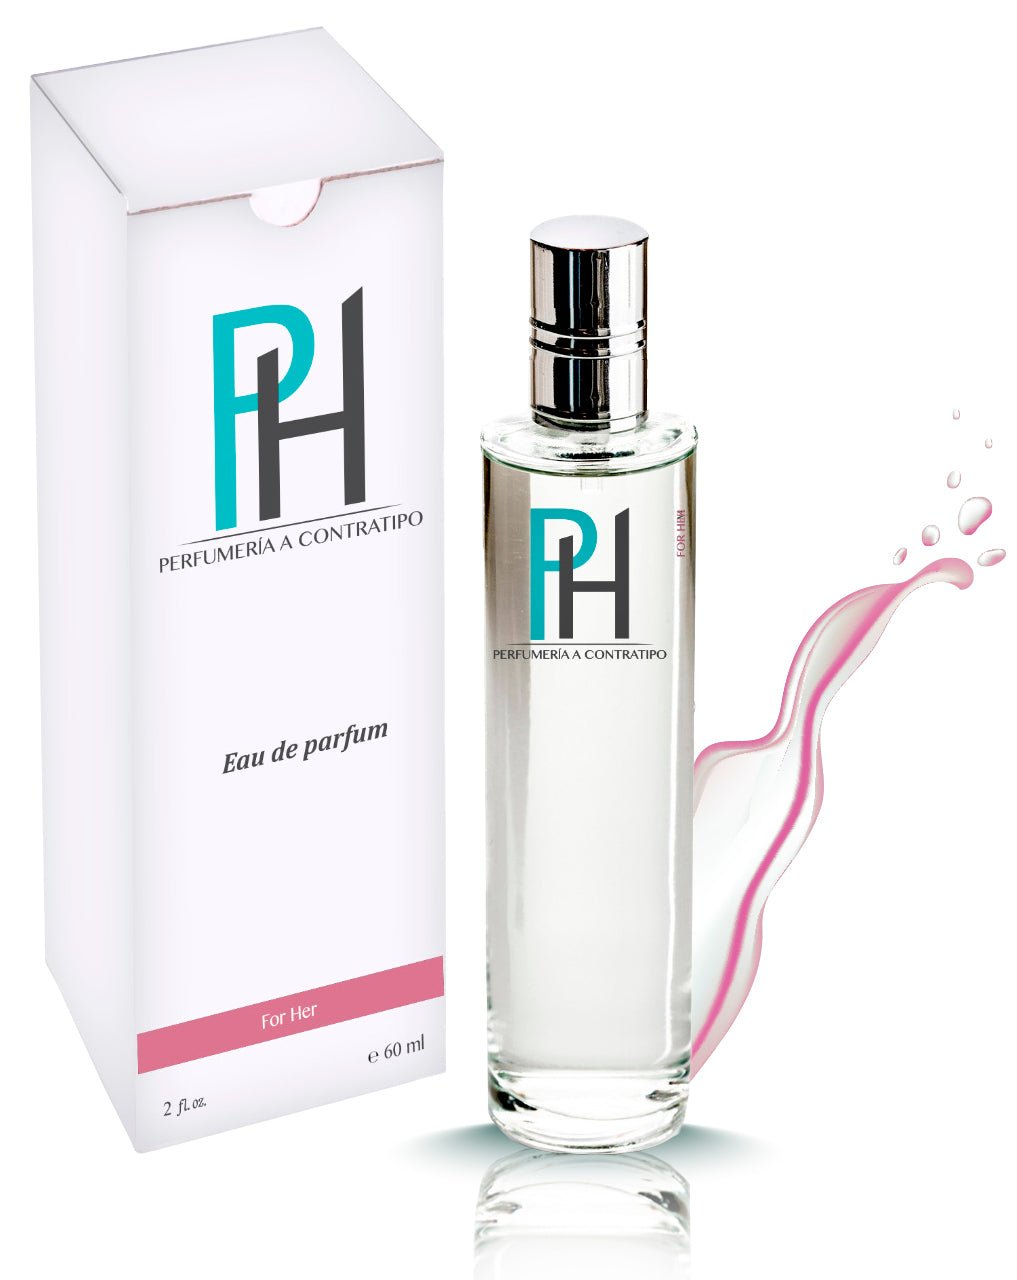 Perfume Amarige de 60 ml - PH Perfumería a Contratipo